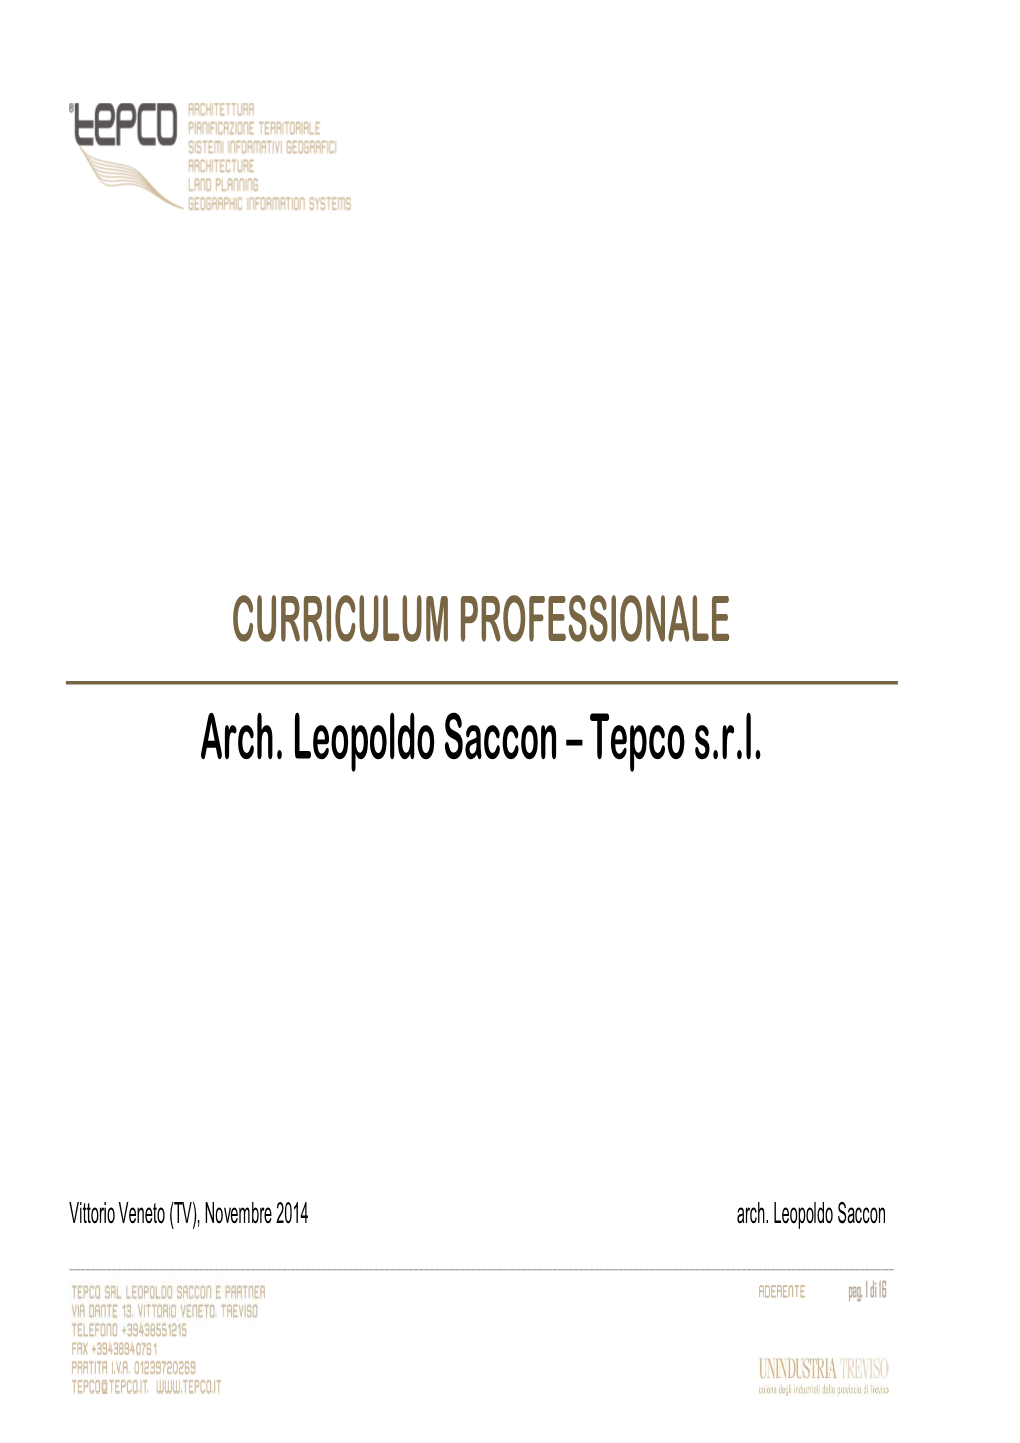 CURRICULUM PROFESSIONALE Arch. Leopoldo Saccon – Tepco S.R.L